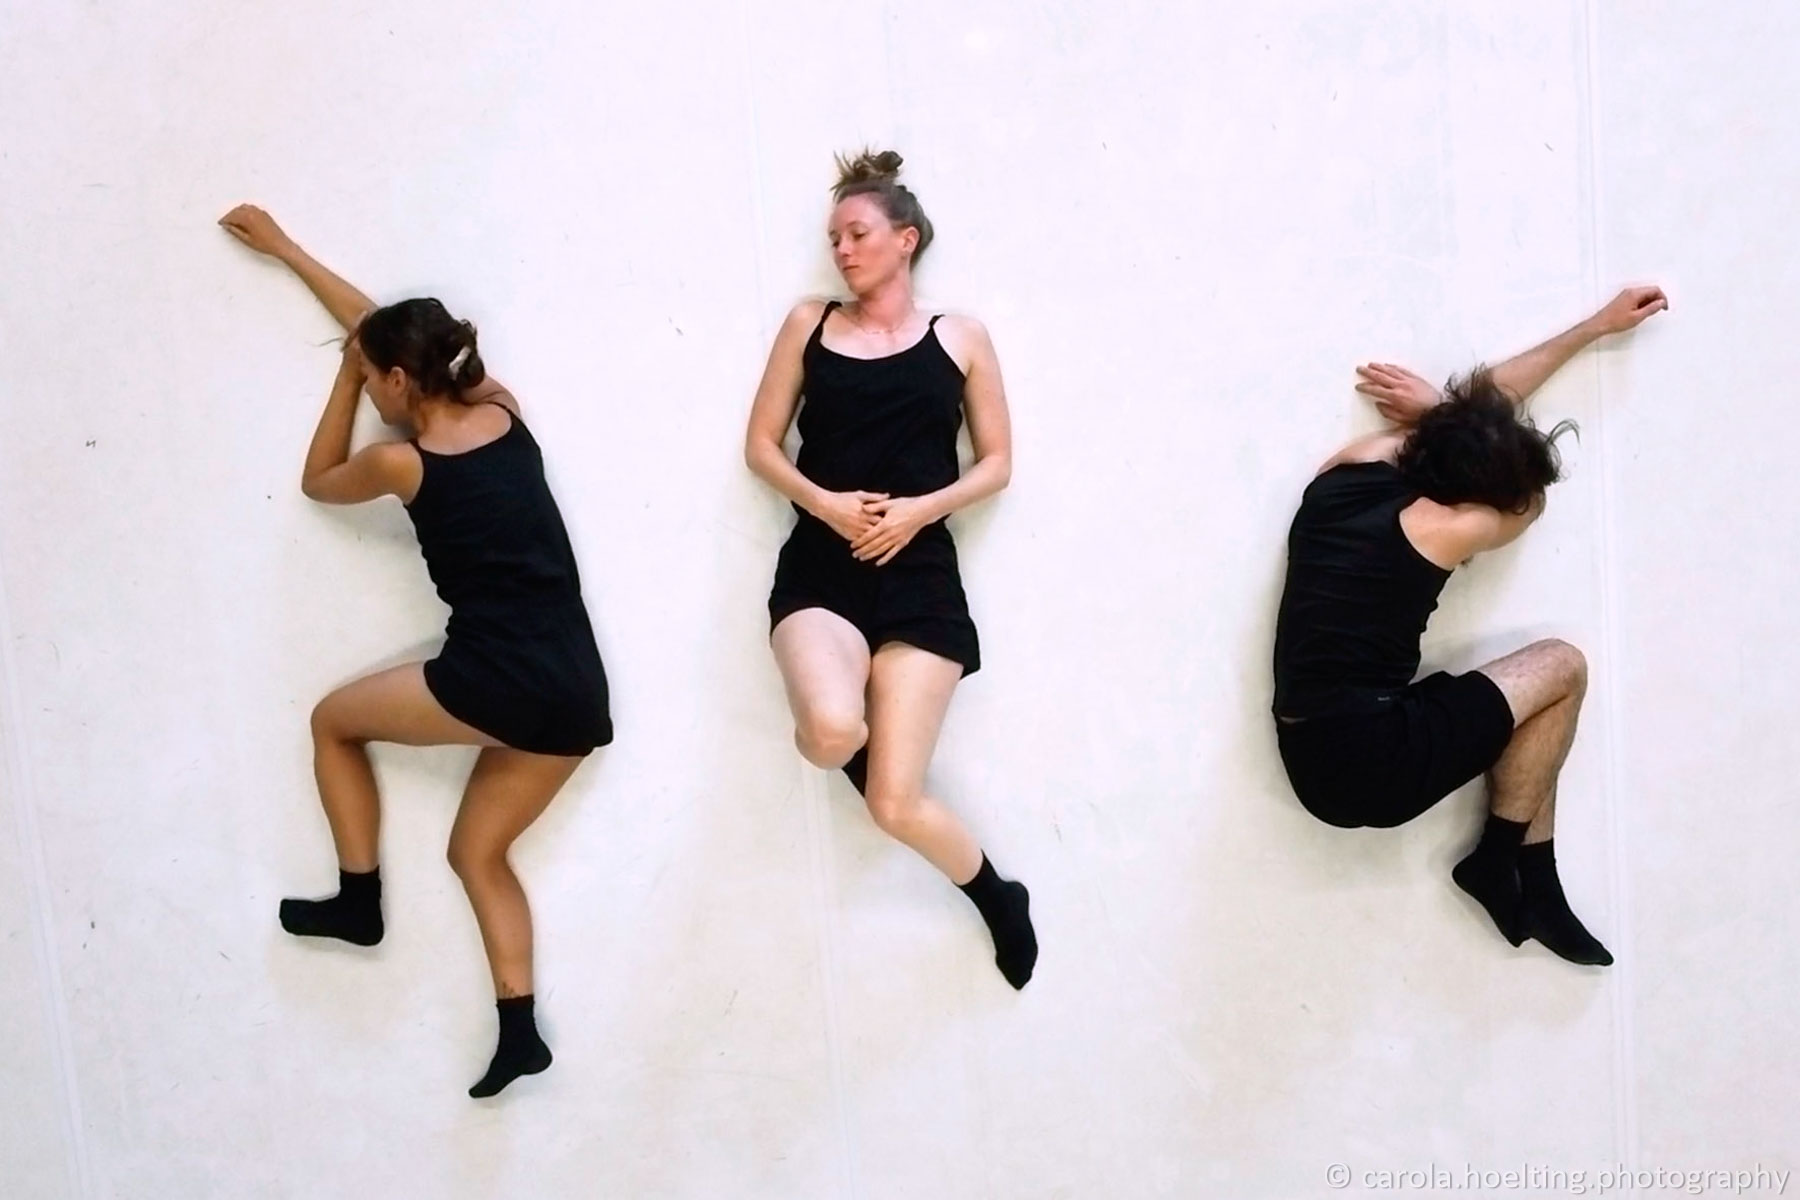 ANSICHTSSACHEn. Research Project with Barbara Cleff. Dancers: Sabrina Rocha, Ronja Häring, Tiziano Portas. Videostill. Berlin 2021